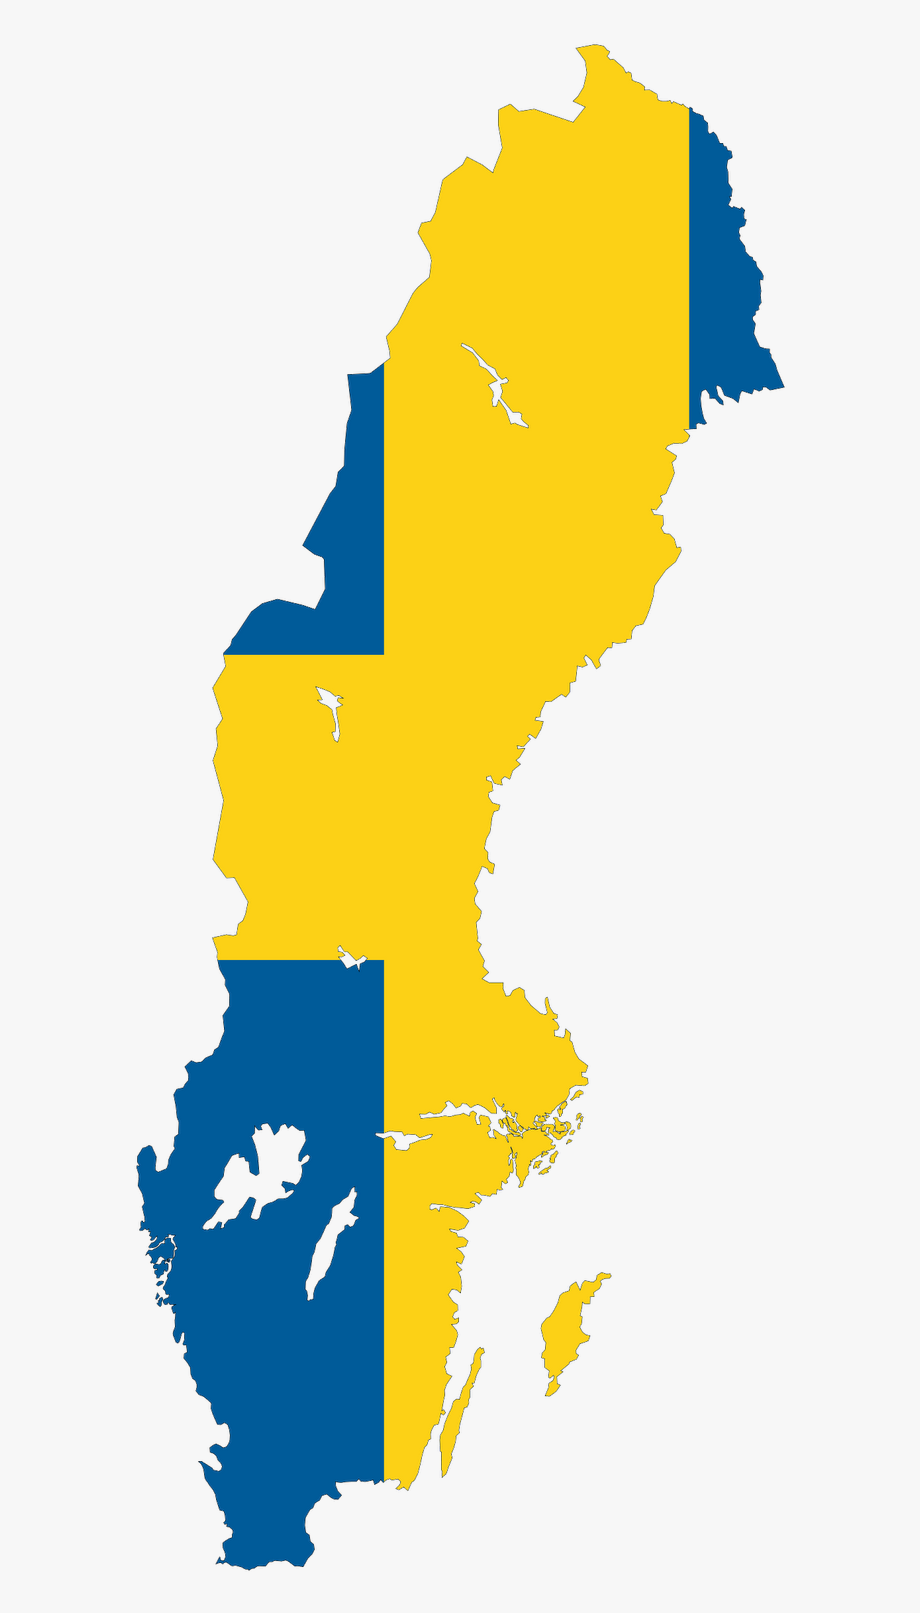 Sweden flag icon.